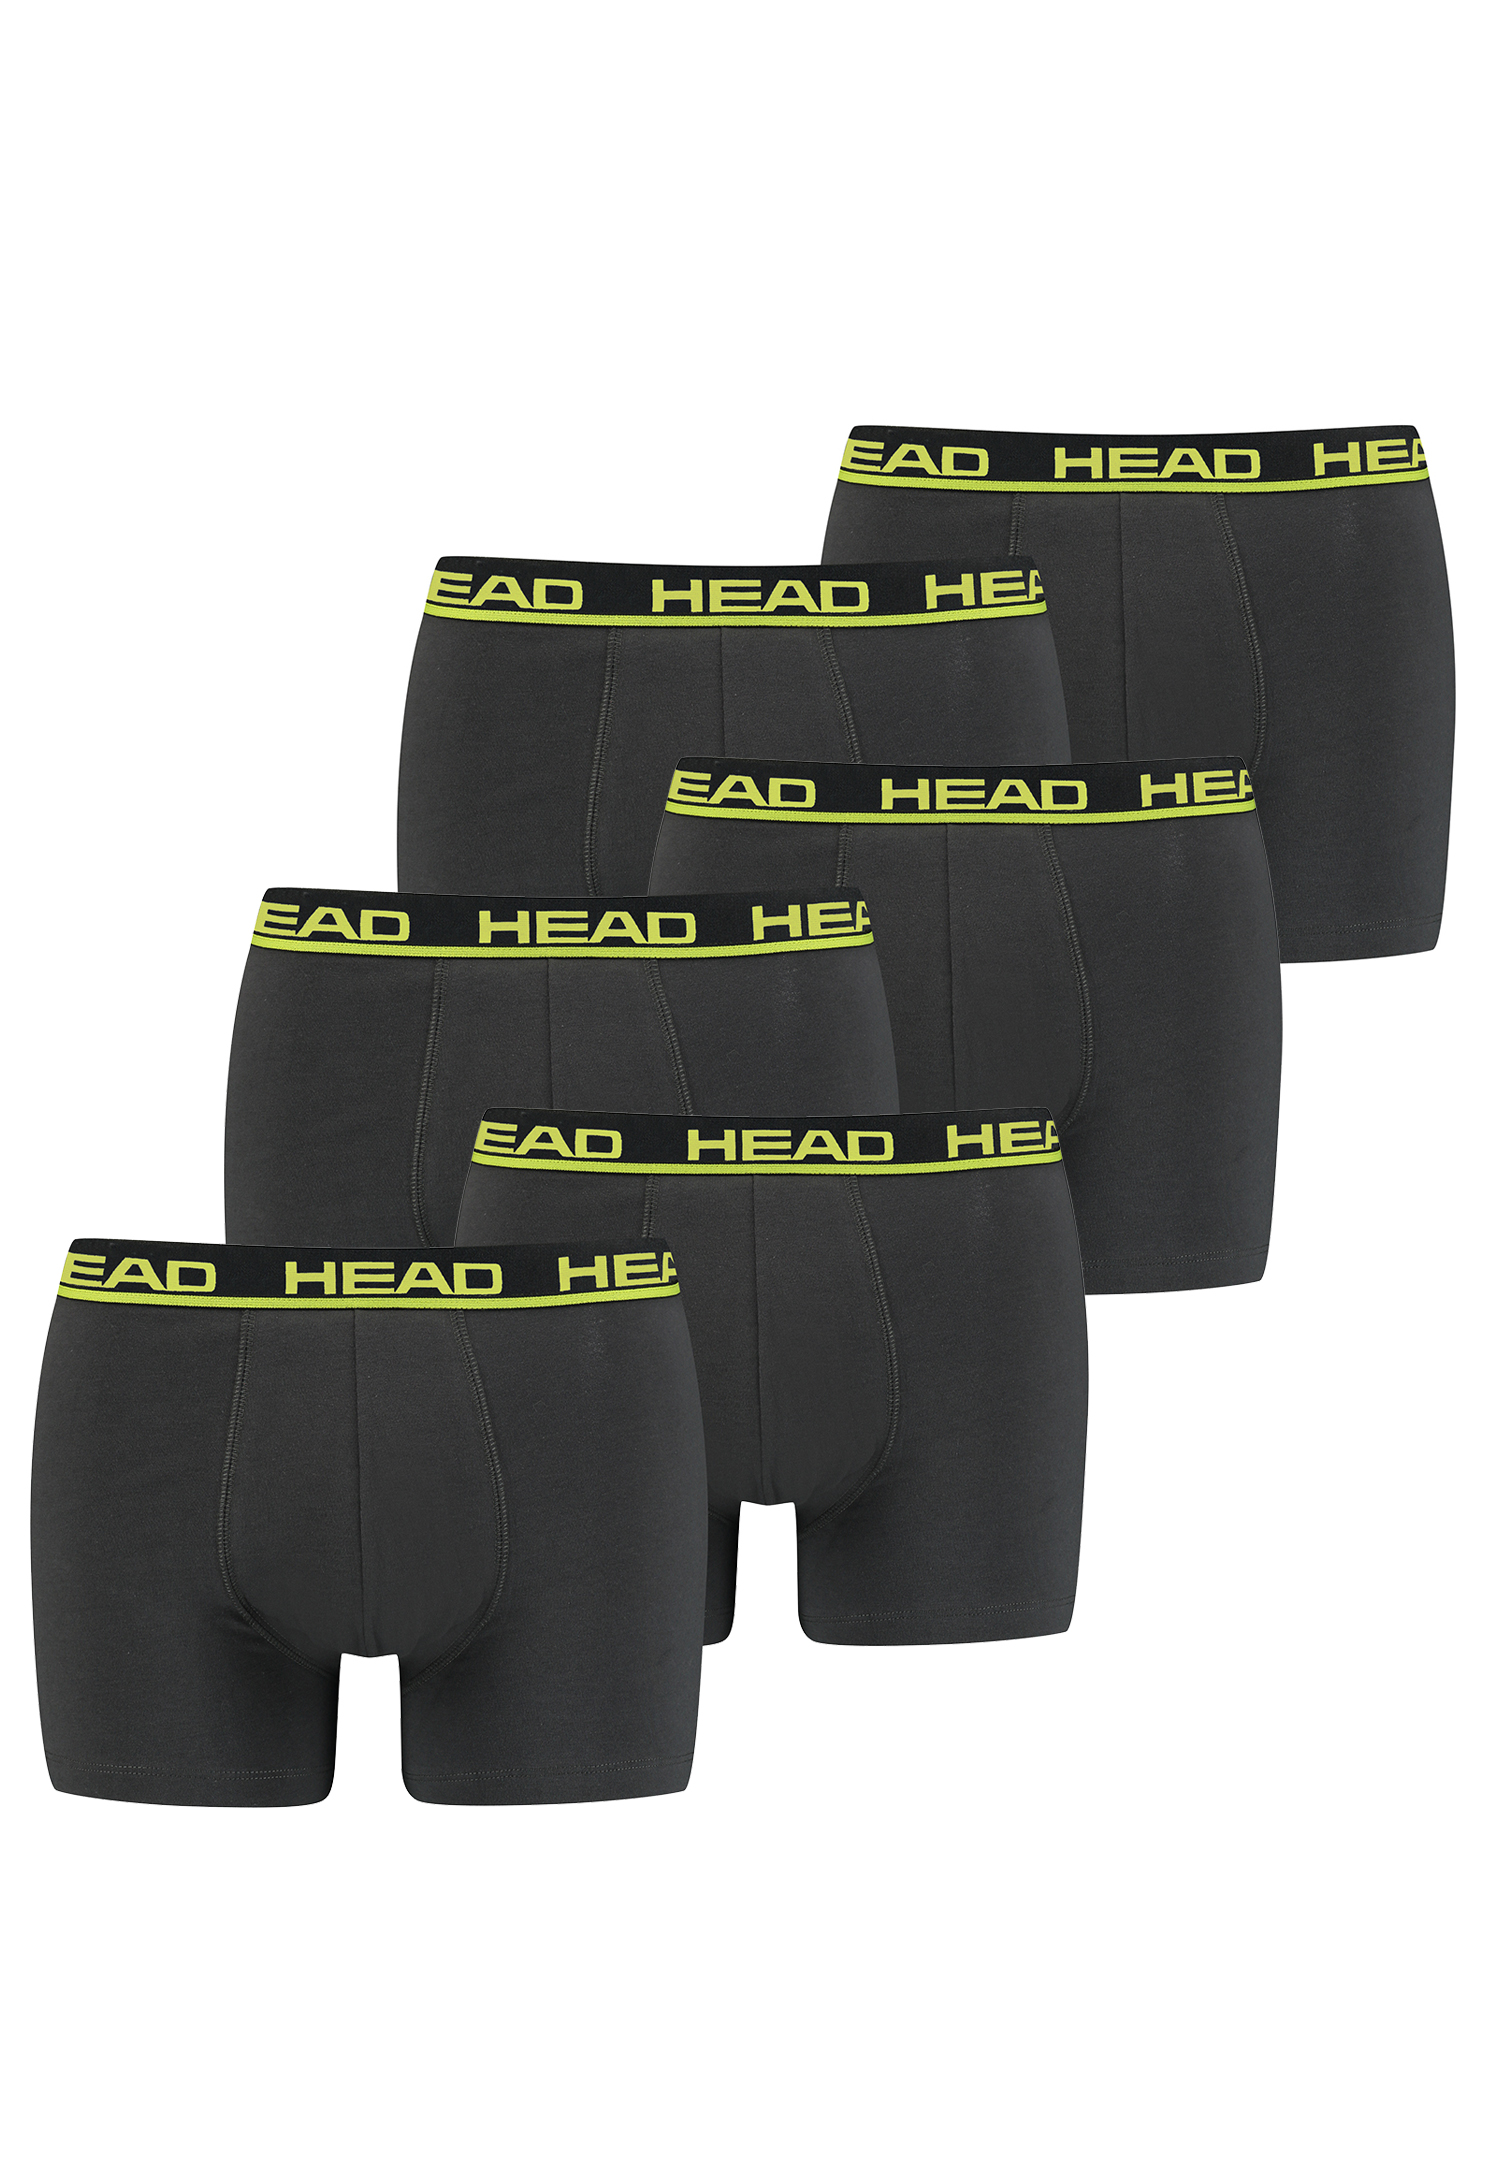 Head Herren Basic Boxer Pant Shorts Unterwäsche Unterhose 6 er Pack 